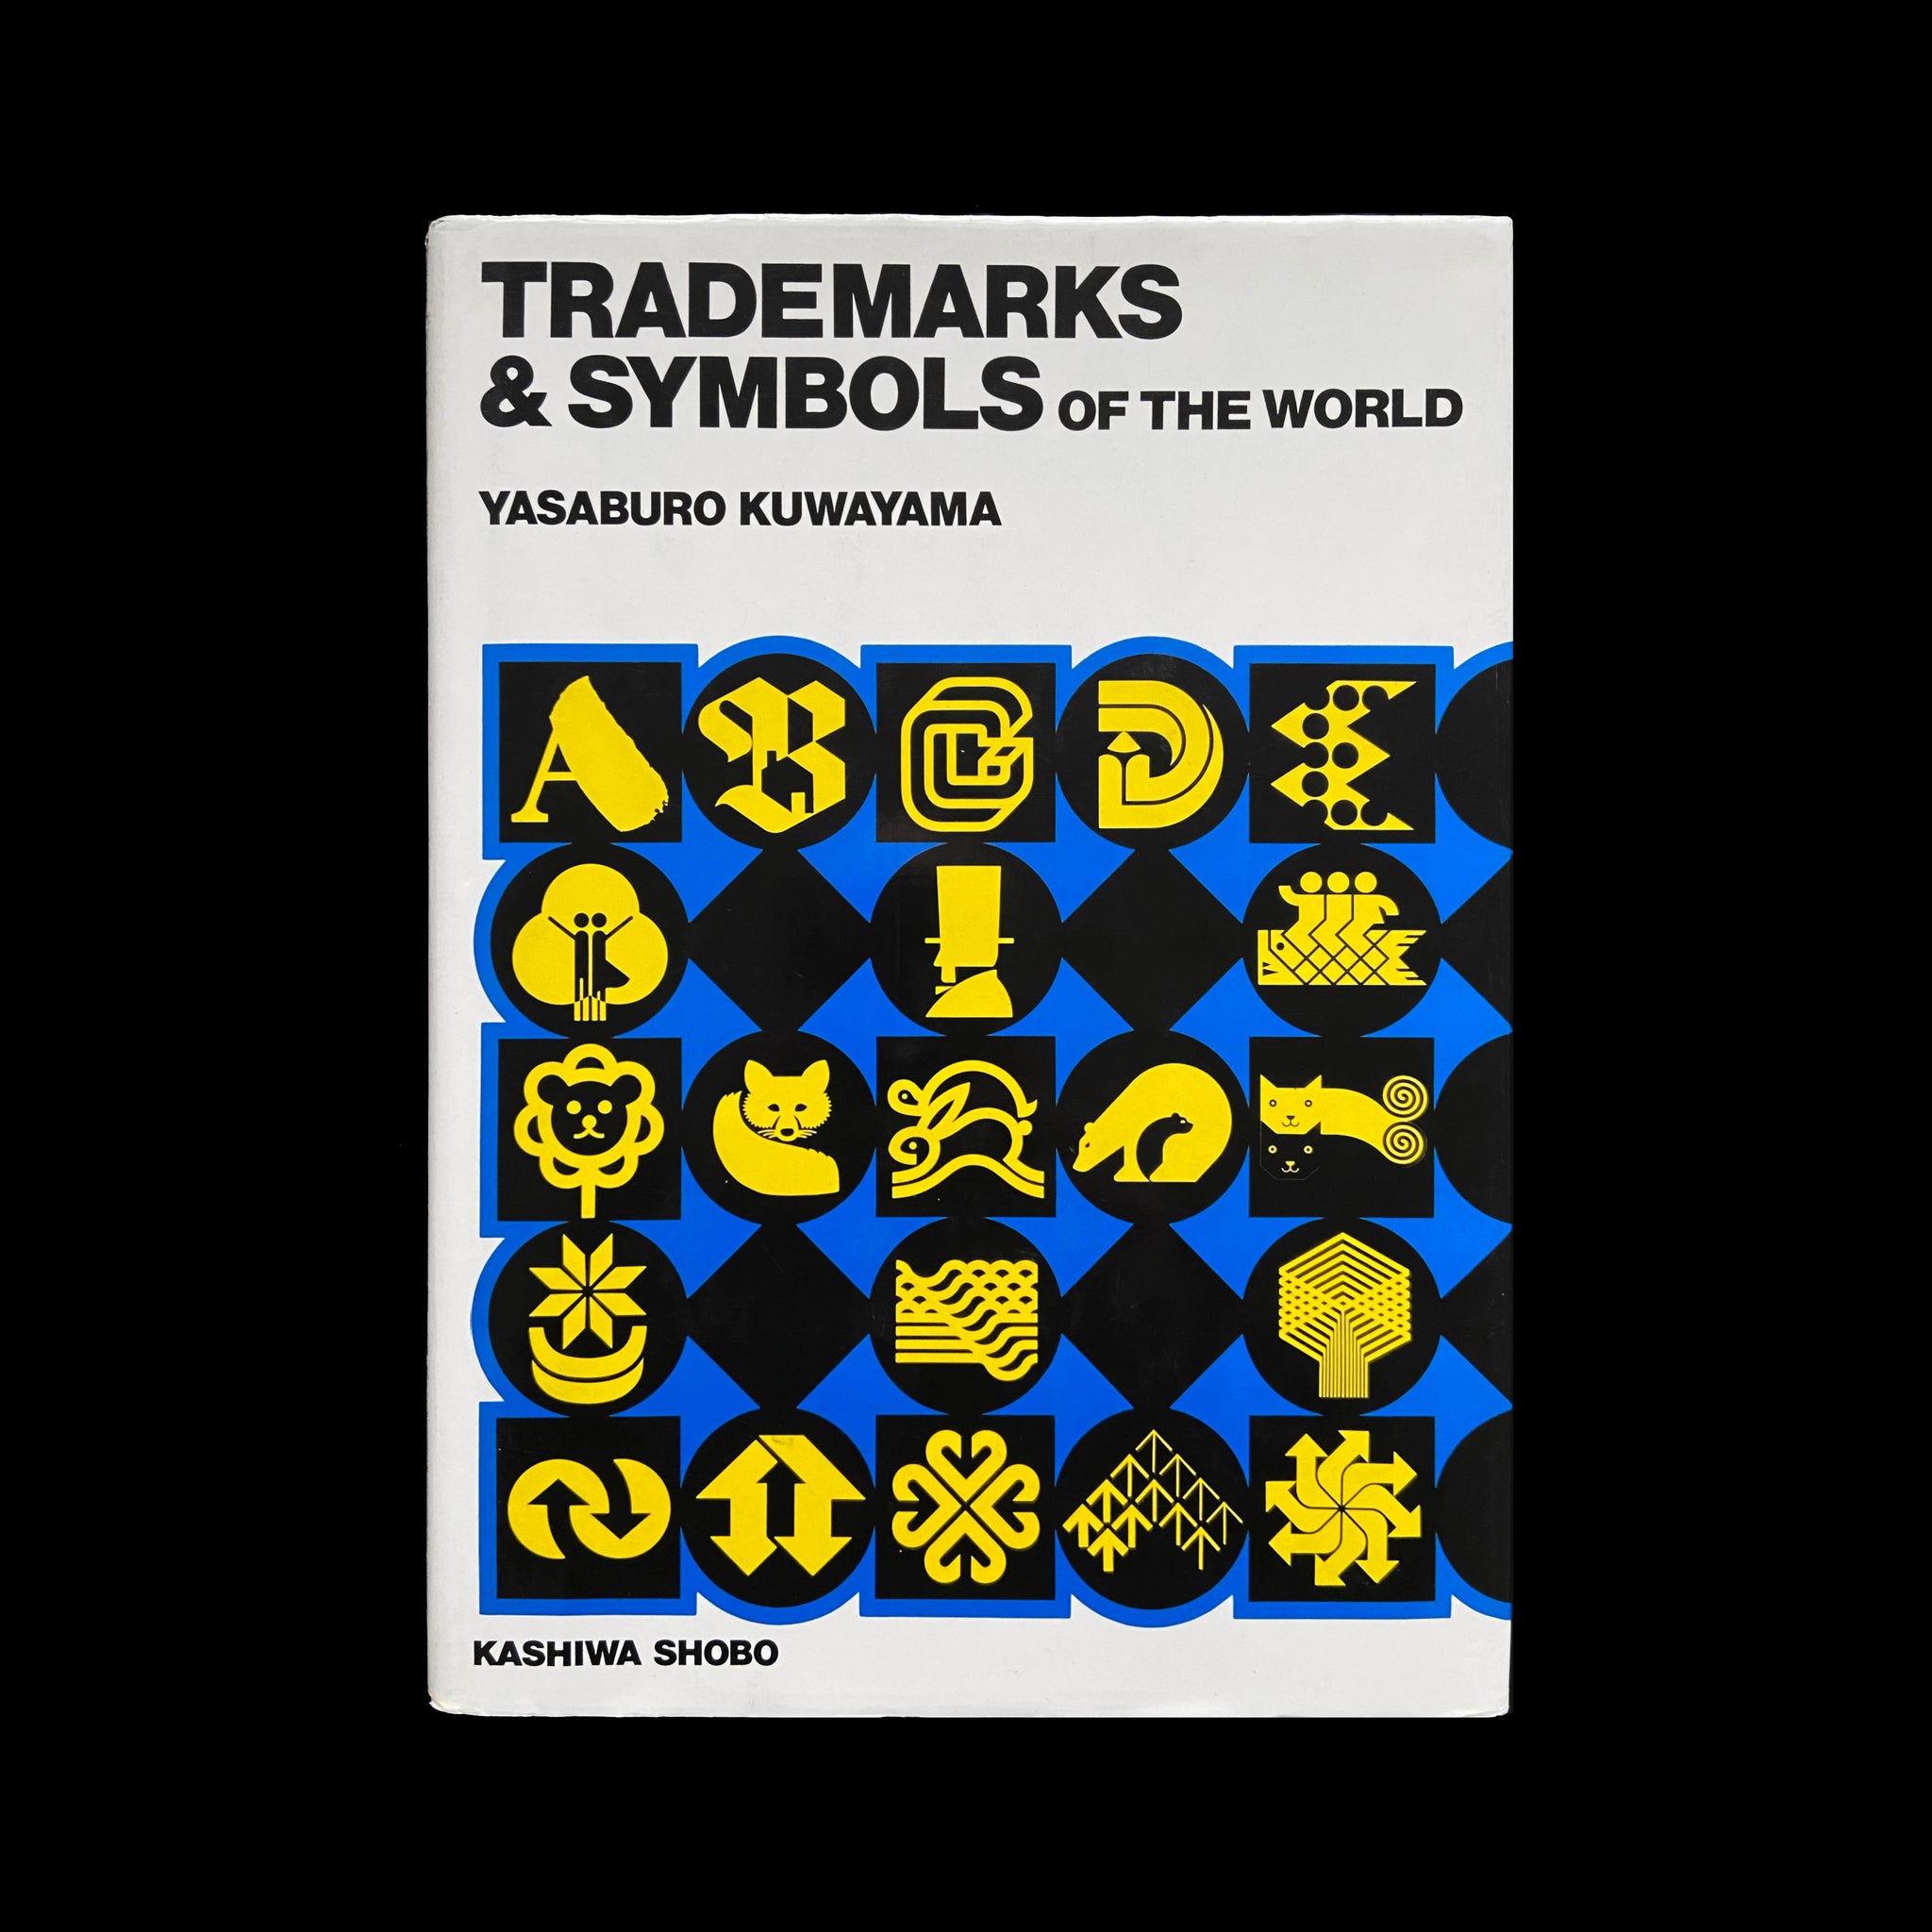 Trademarks & Symbols of the World 1, 1987